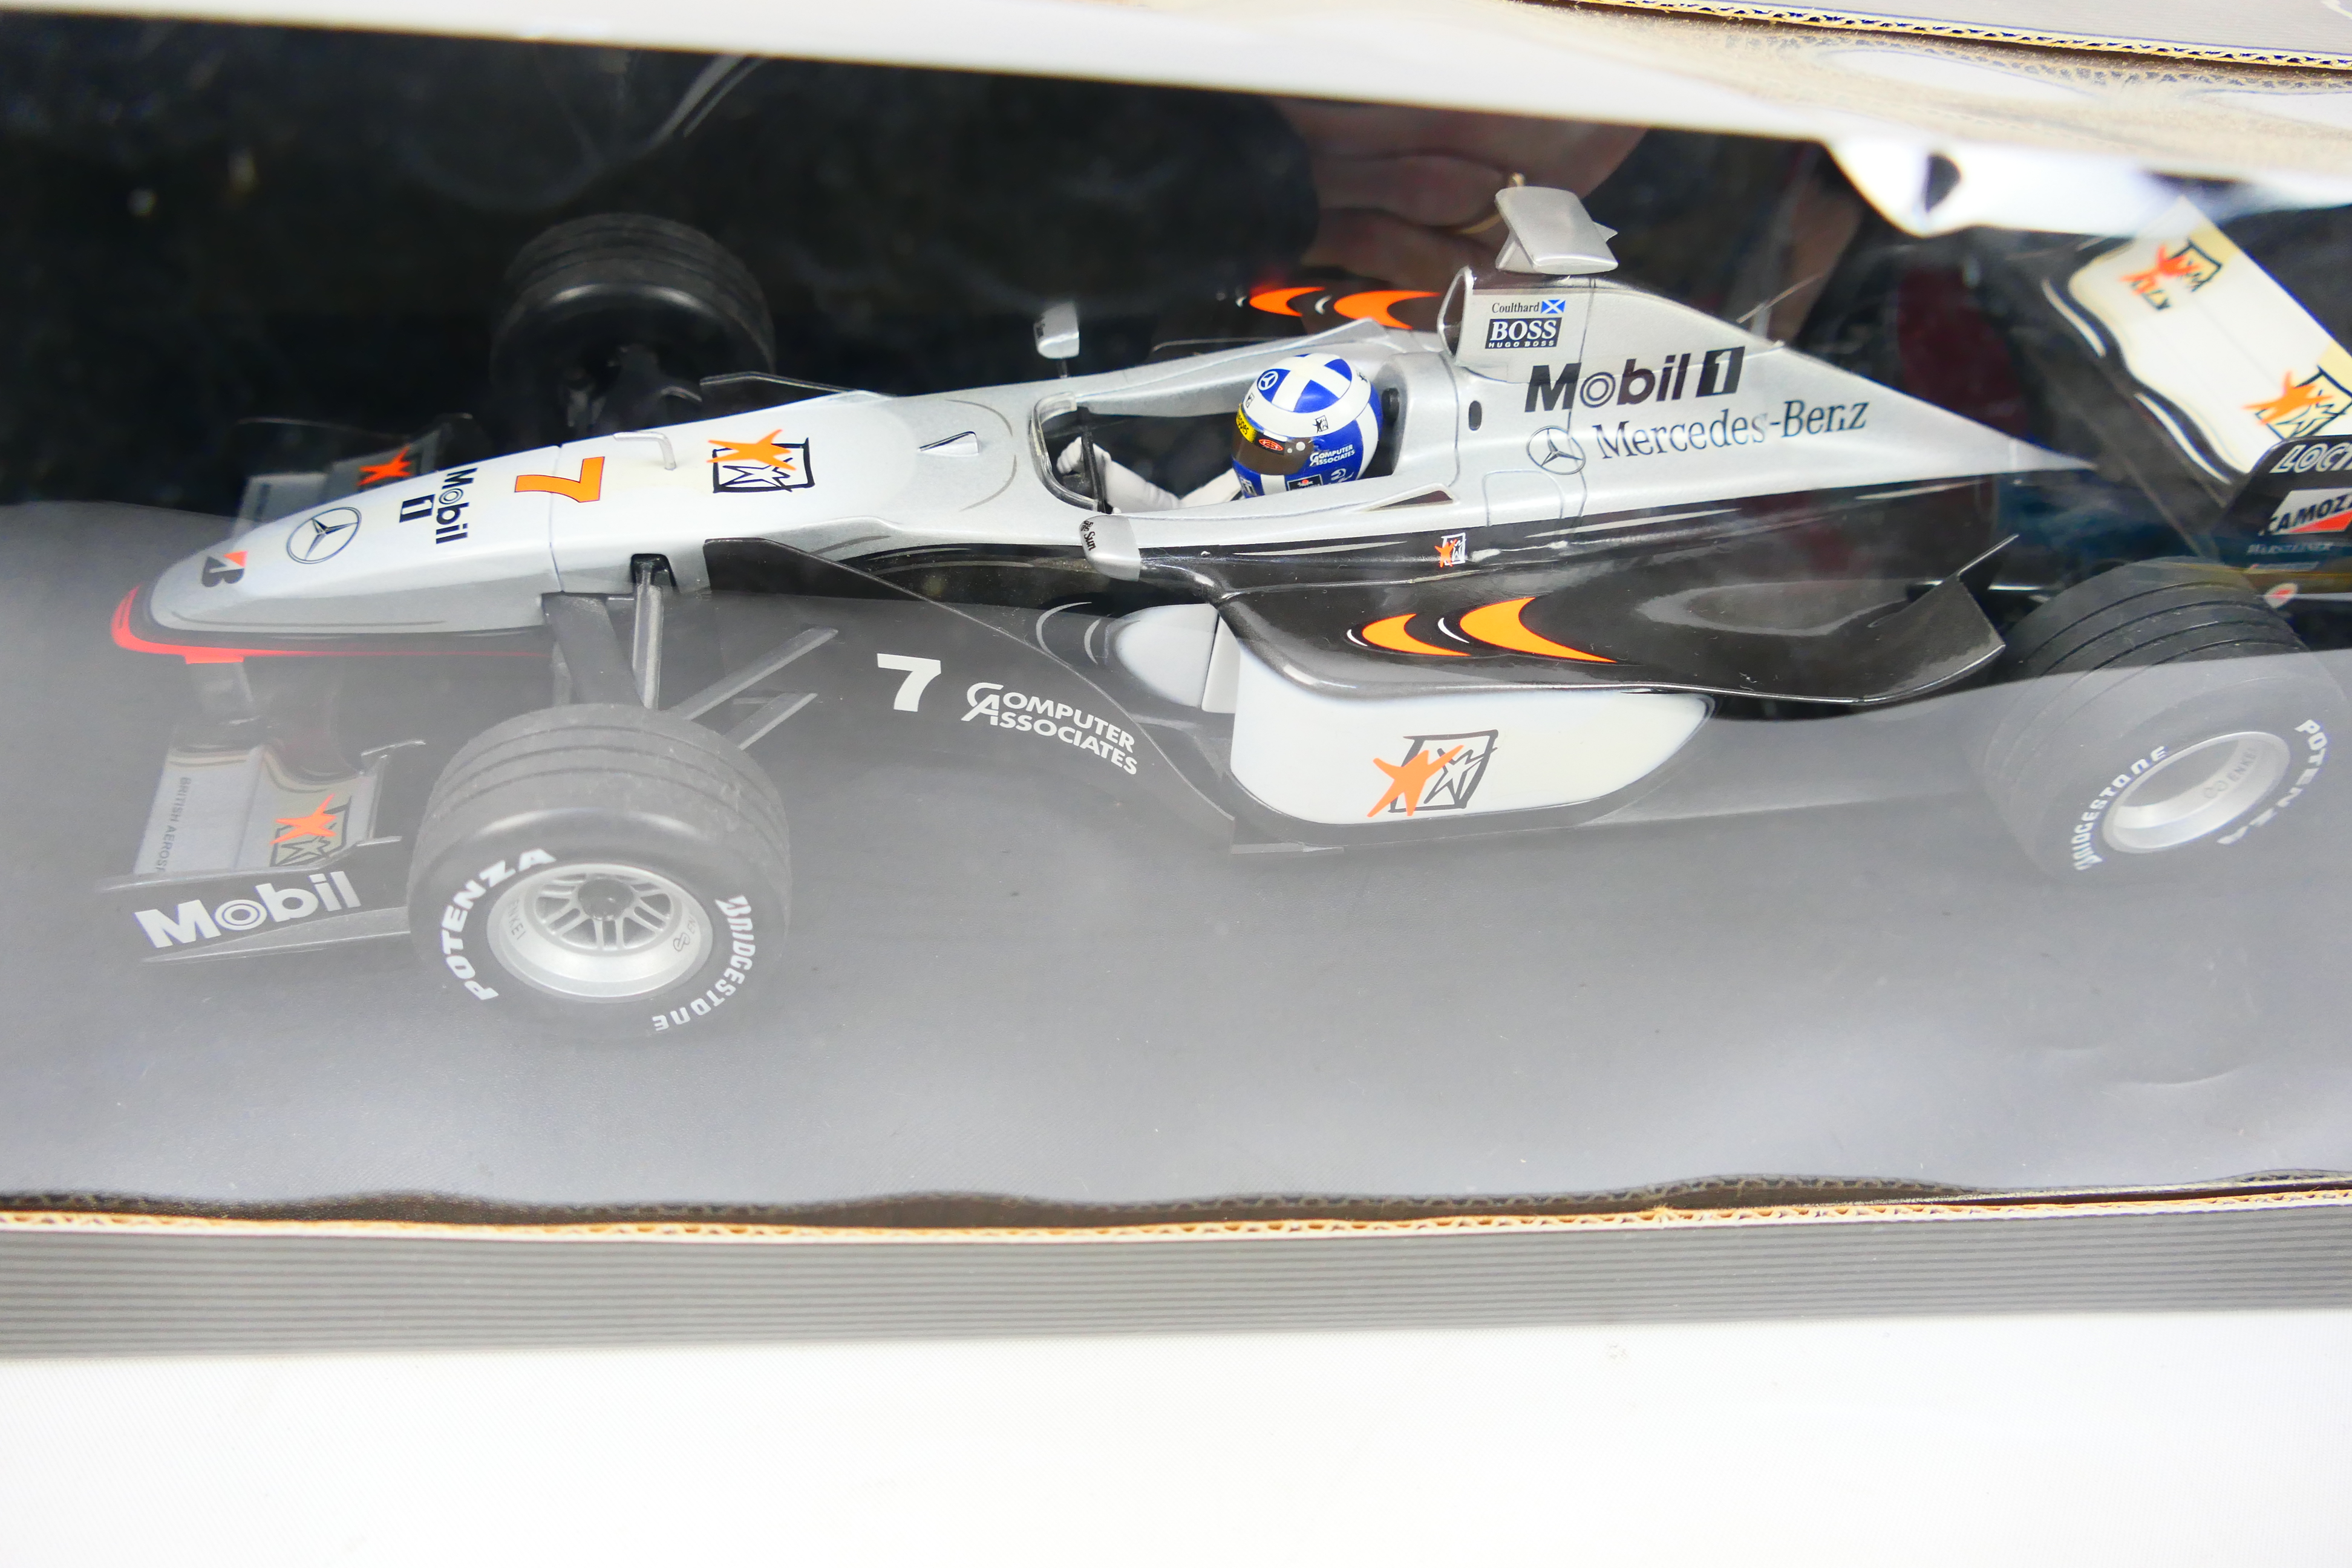 Minichamps - A boxed 1:18 scale Minichamps B6 6960220 diecast McLaren Mercedes F1 Racing Car, - Image 4 of 12